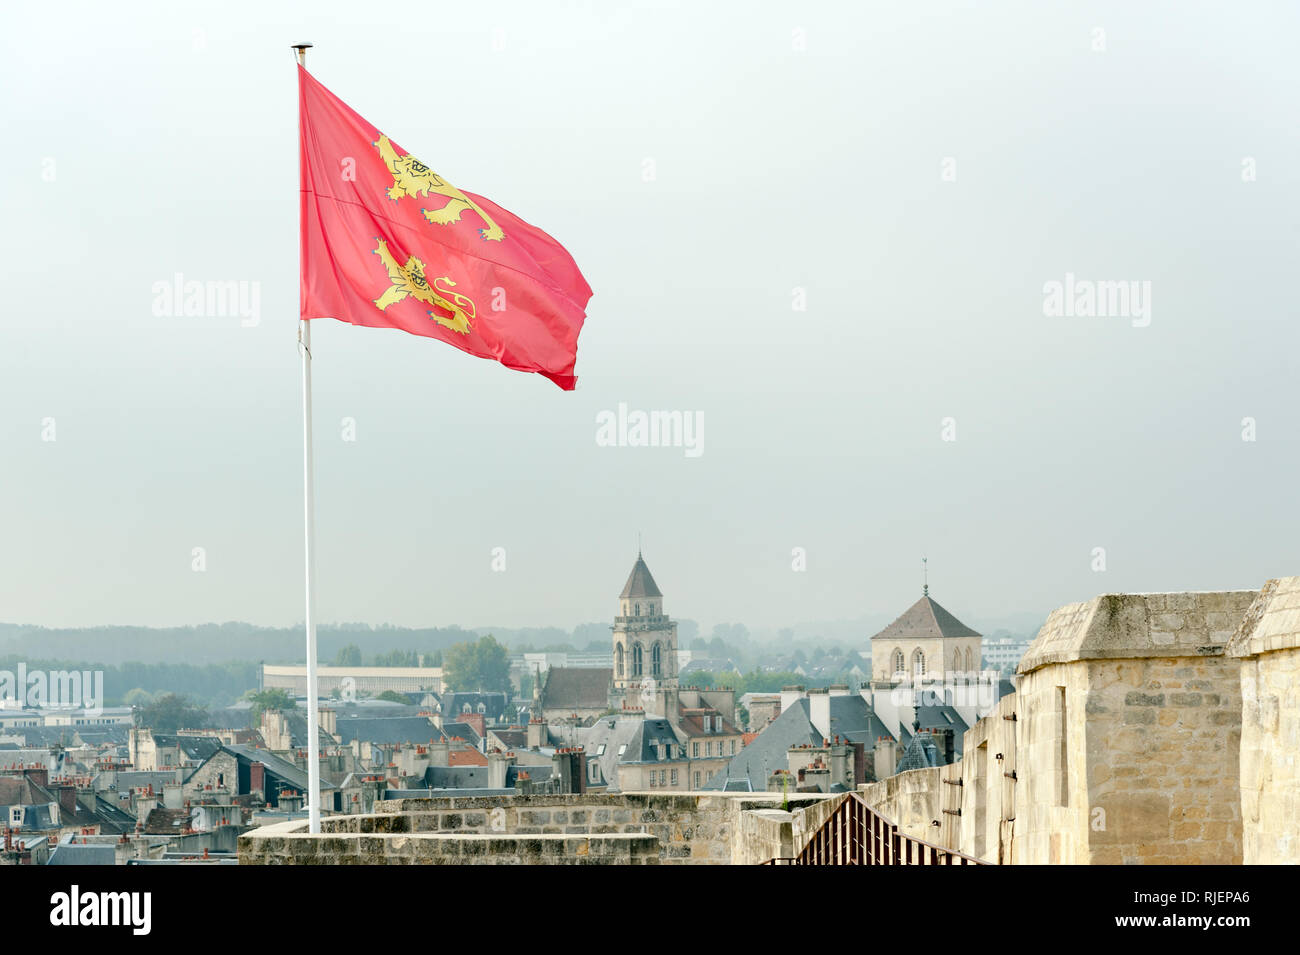 Normandy flag above Chateau de Caen (Caen Castle) built by William the Conqueror, Caen, France Stock Photo